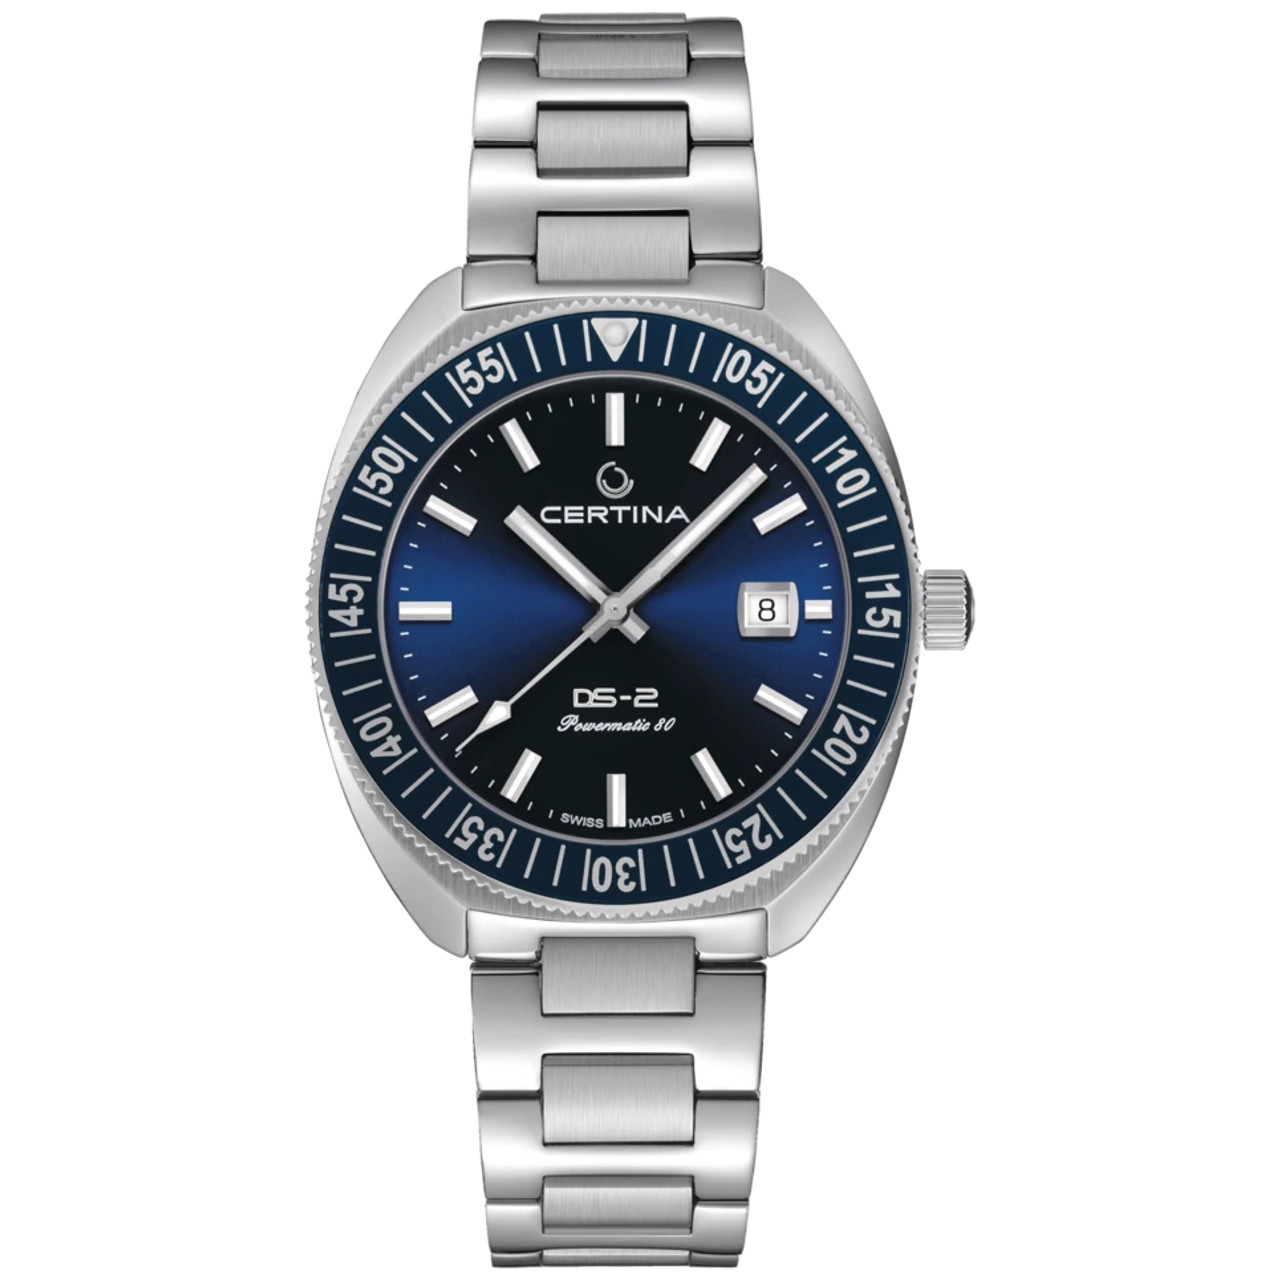 Certina DS-2 Powermatic 80 Bracelet Watch